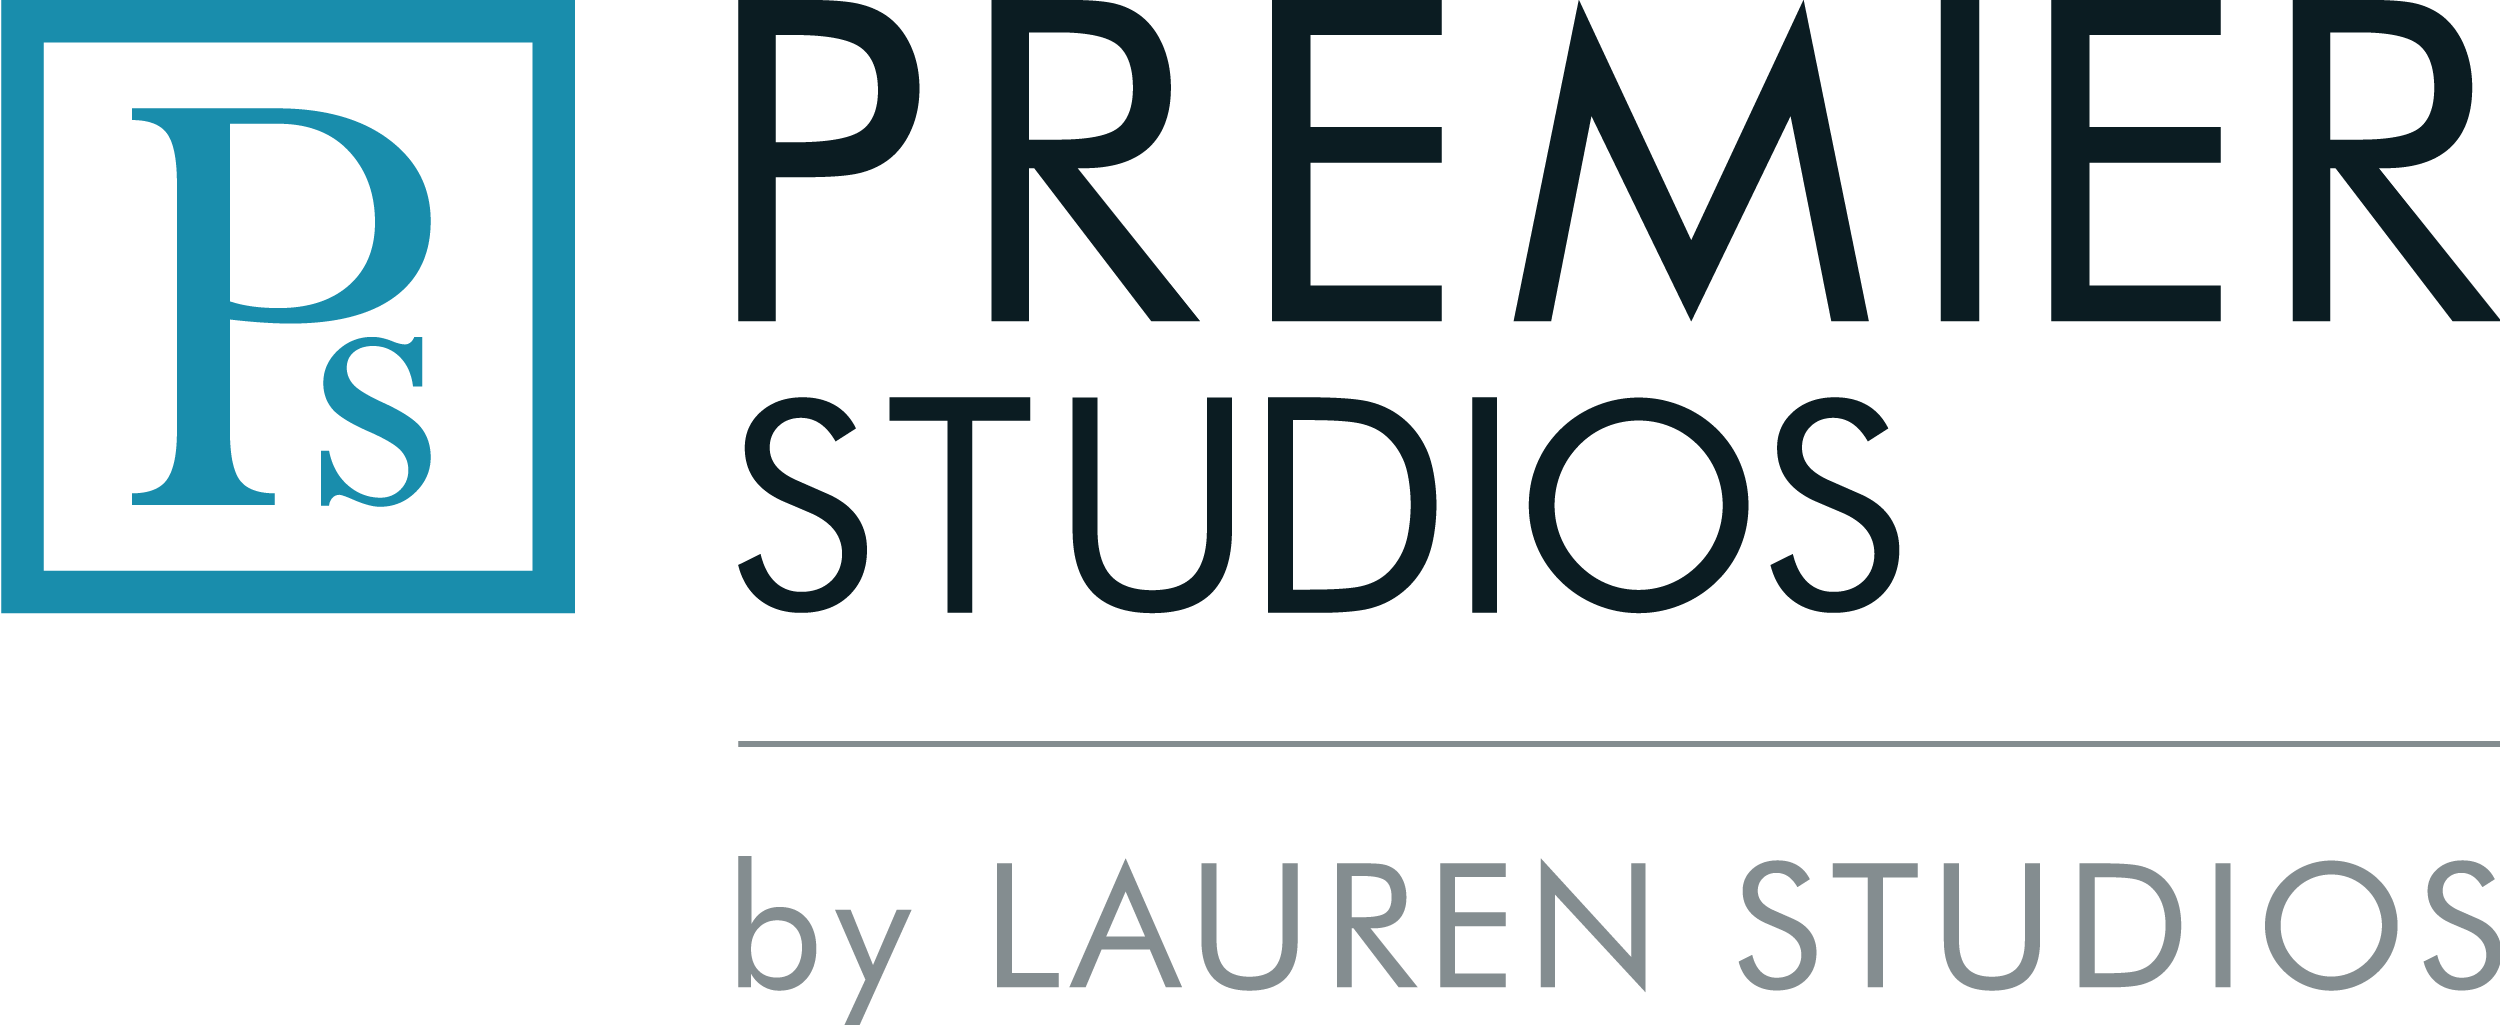 Premier Studios, Inc.